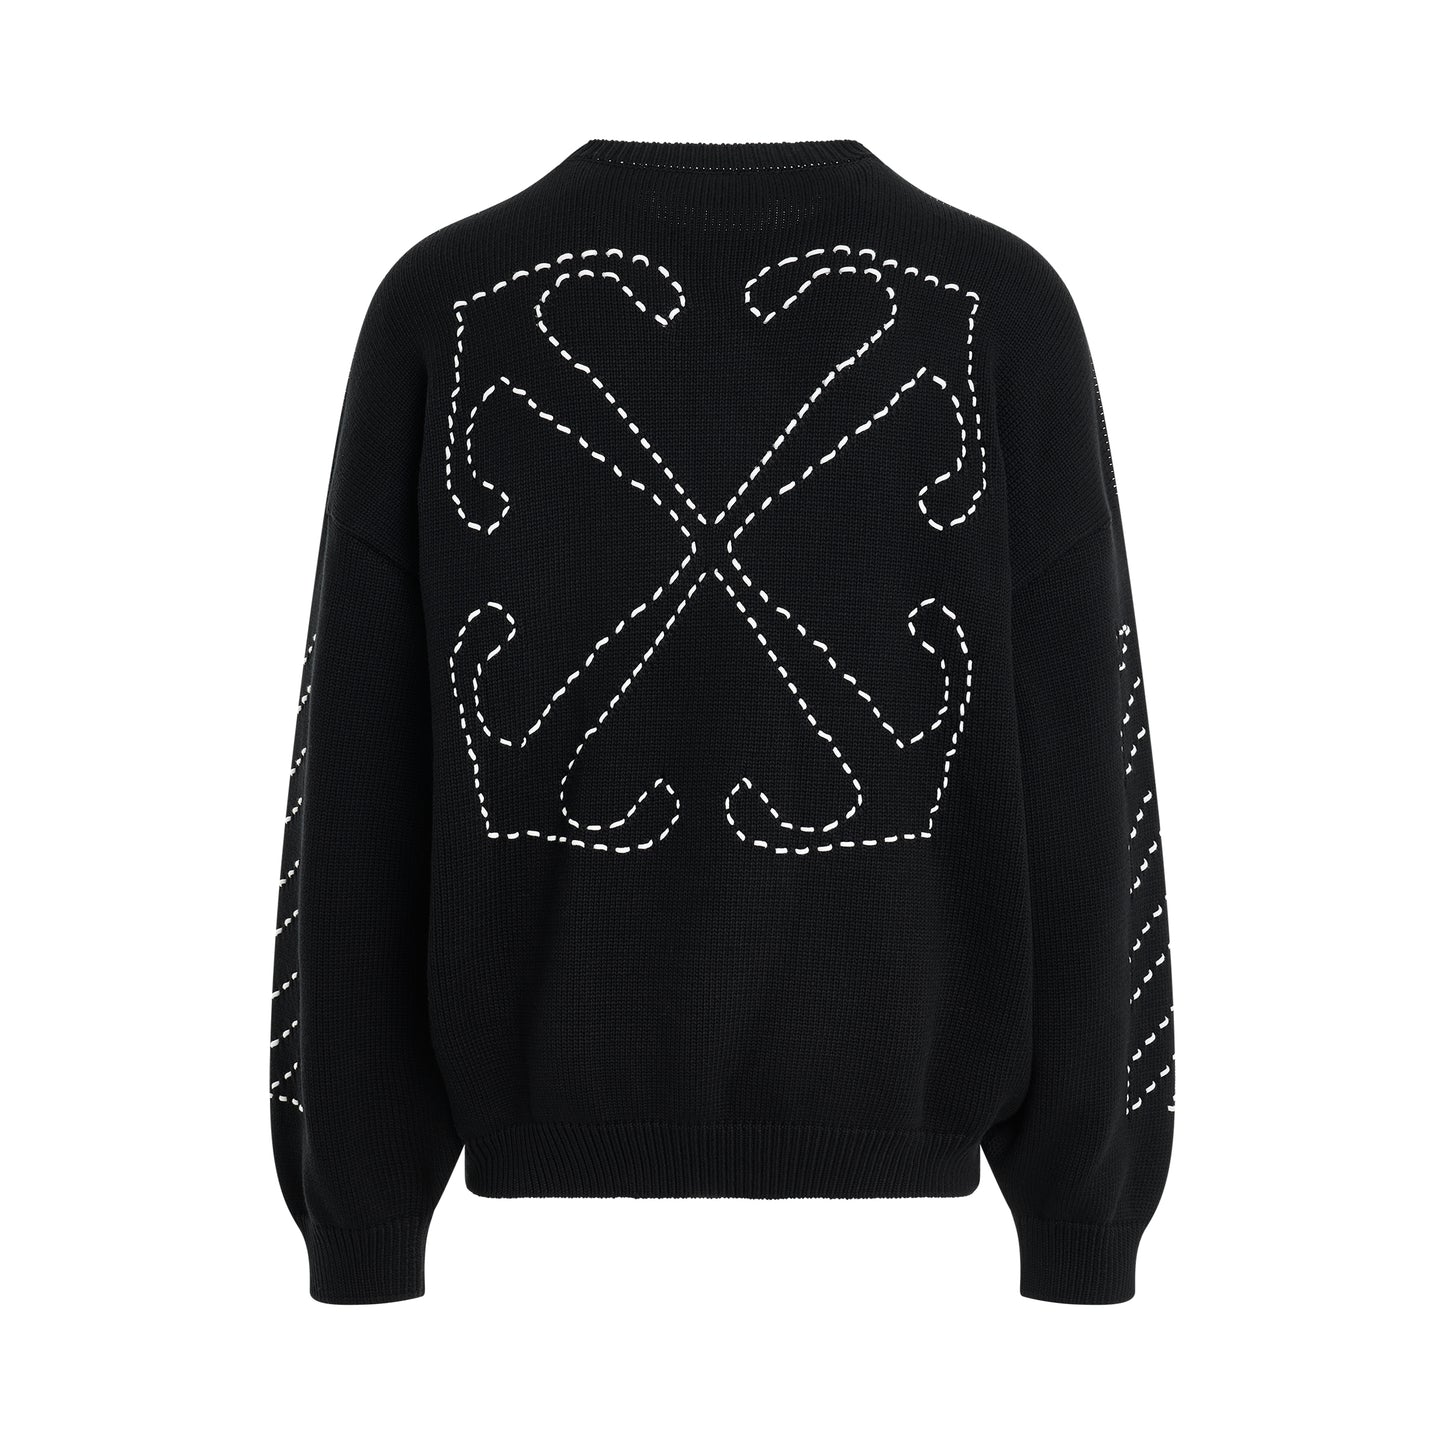 Stitch Diagonal Arrow Knit Sweater in Black/Cream